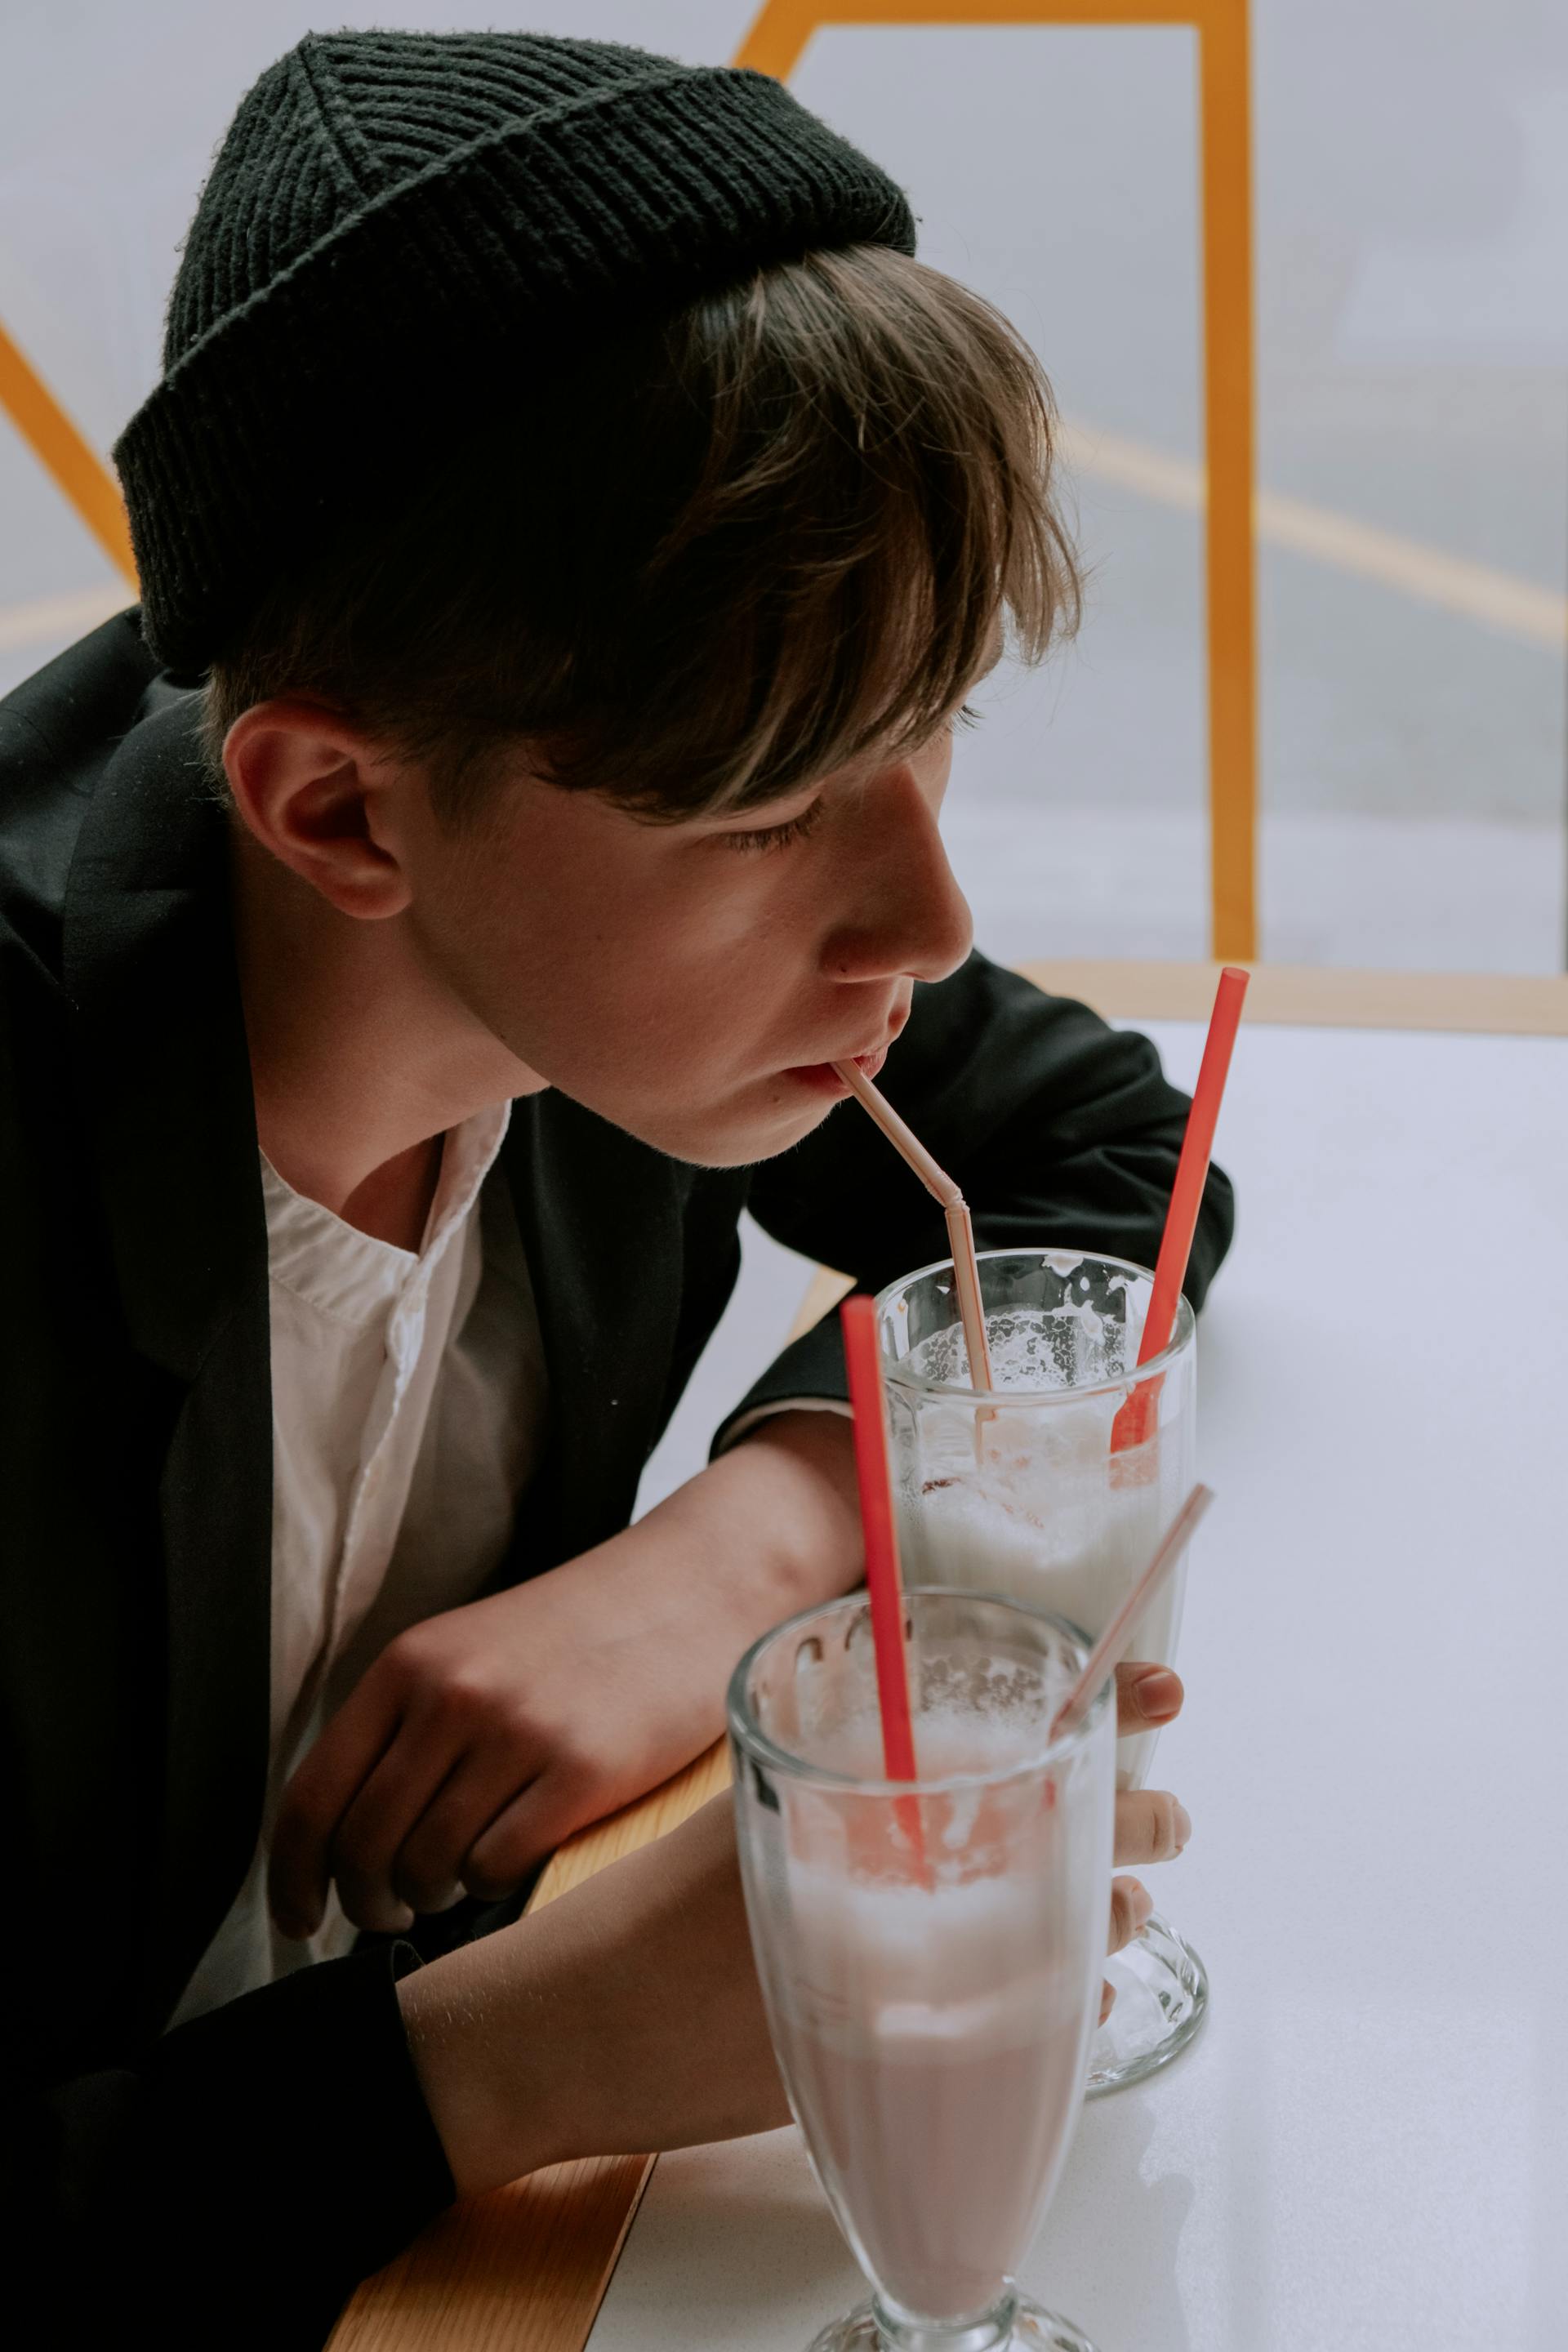 A boy drinking a milkshake | Source: Pexels